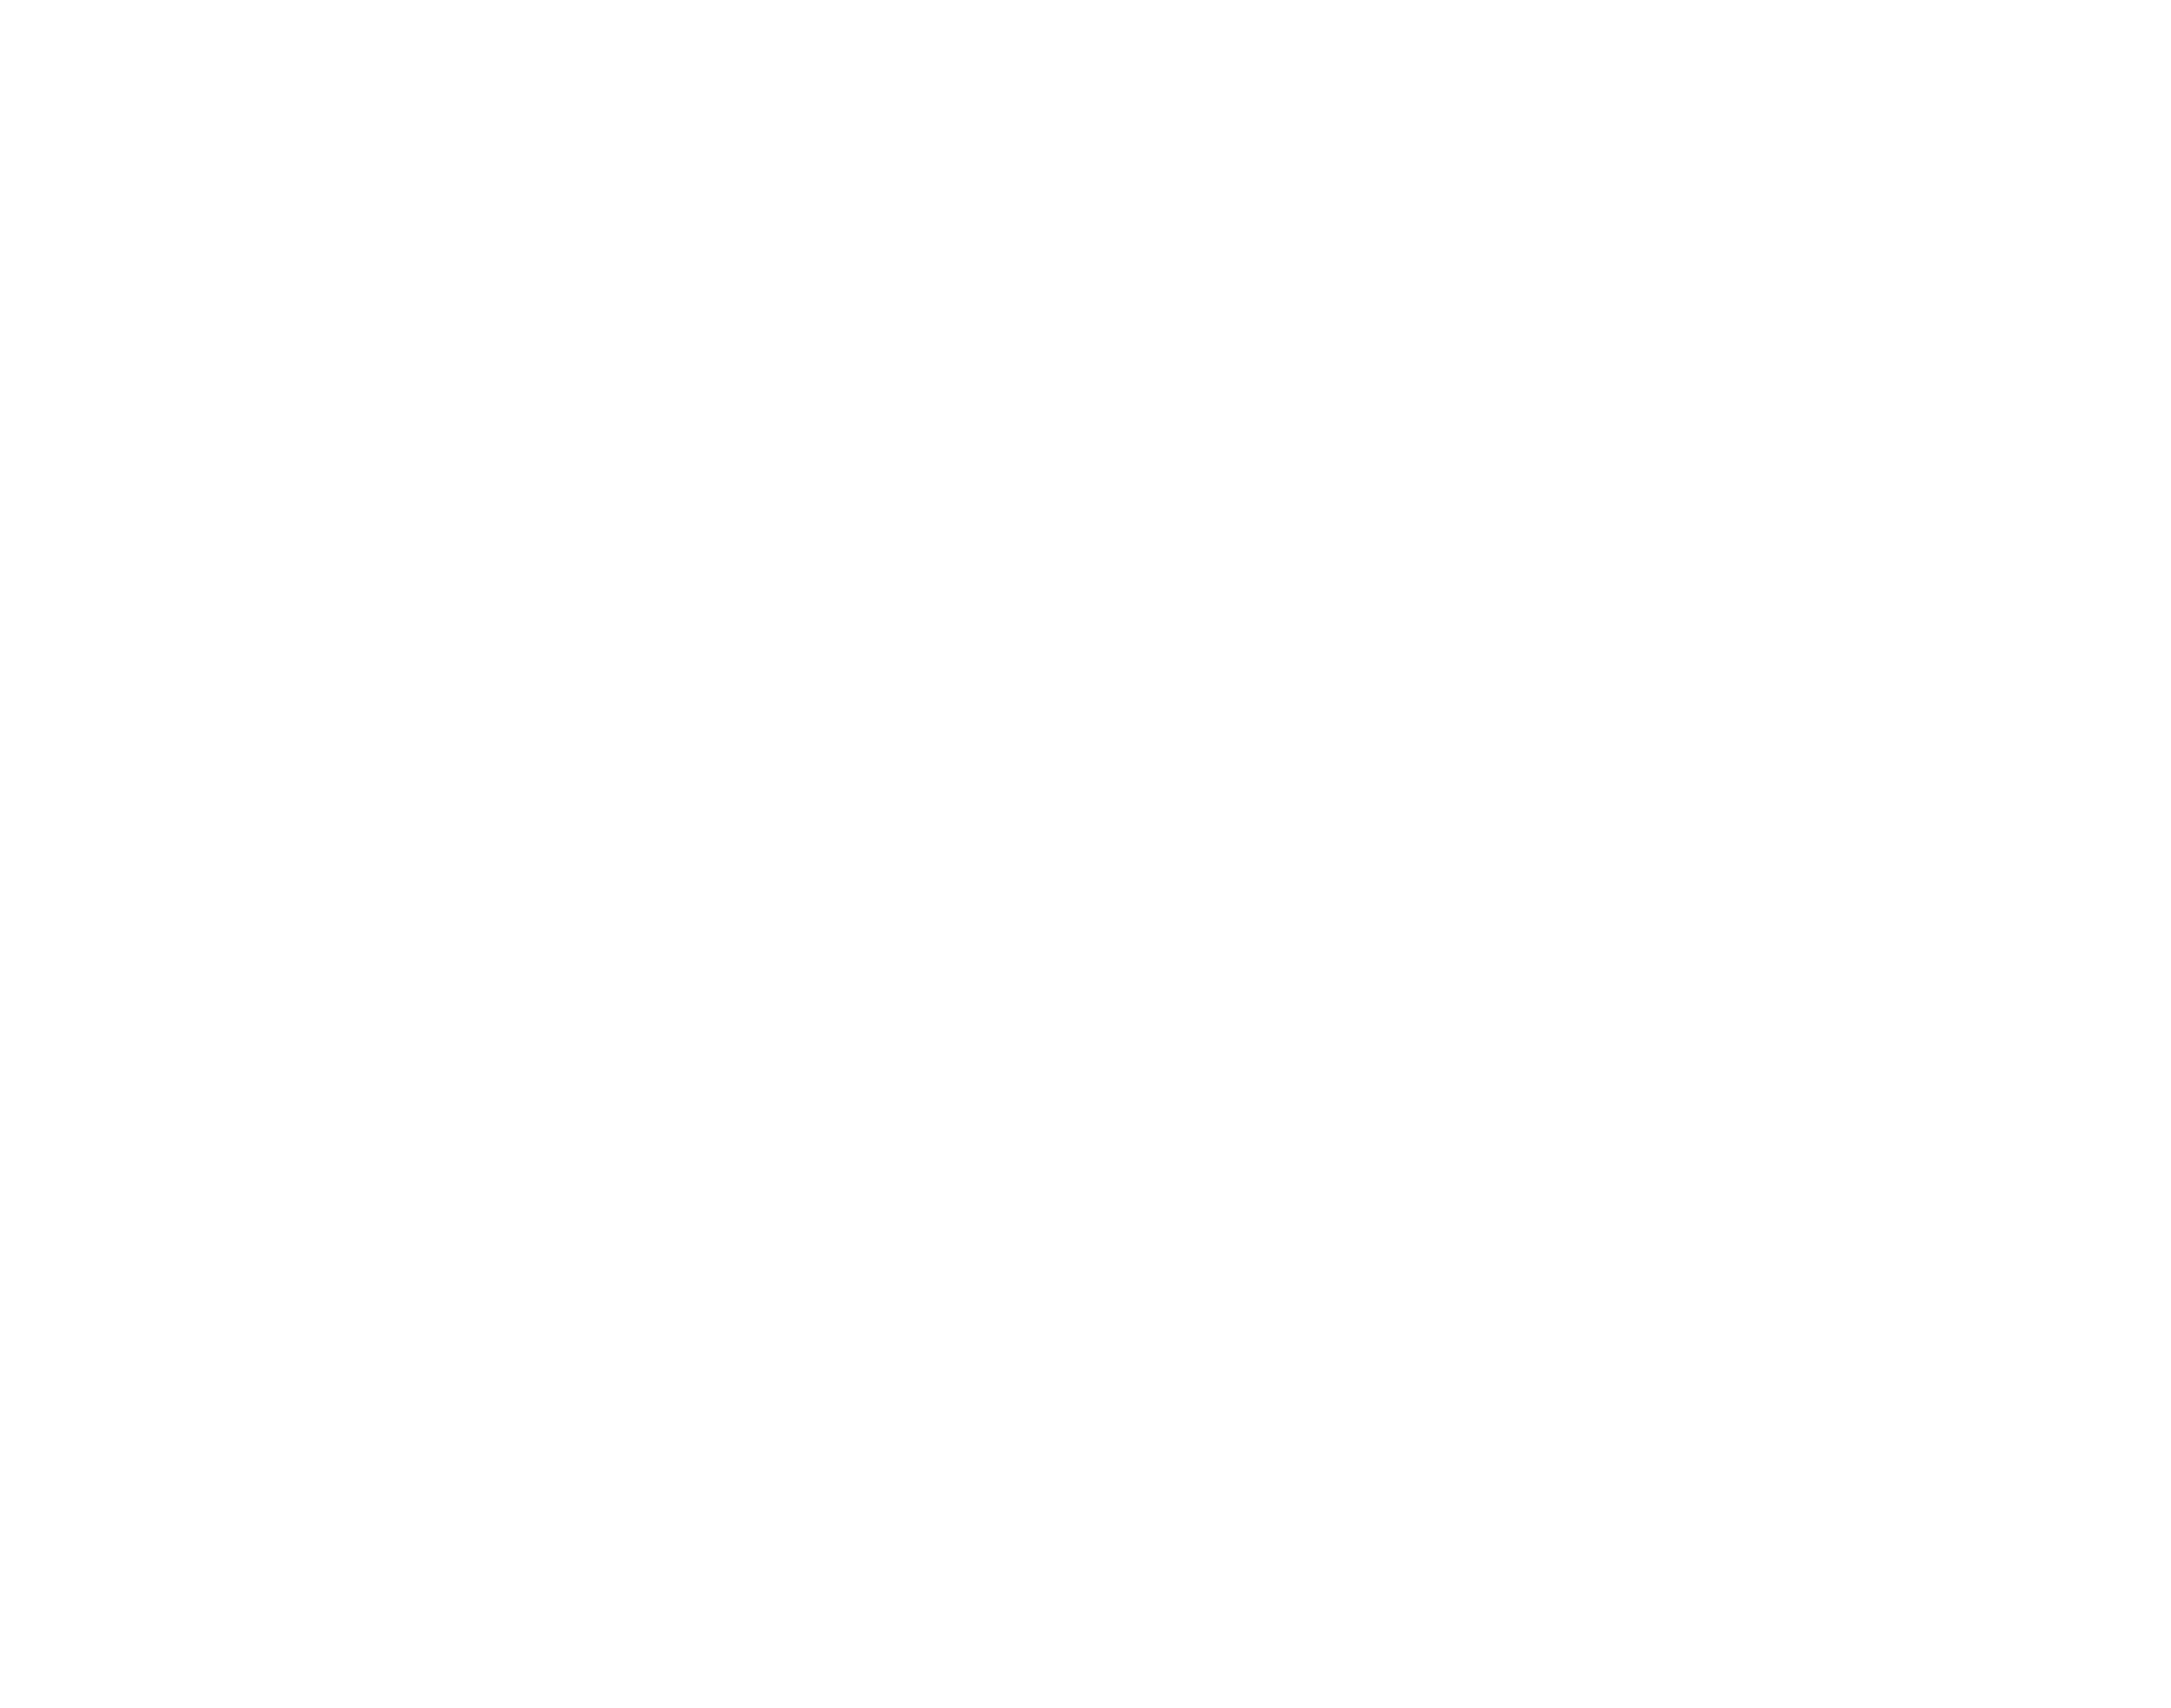 MACK WEDDING DESIGN